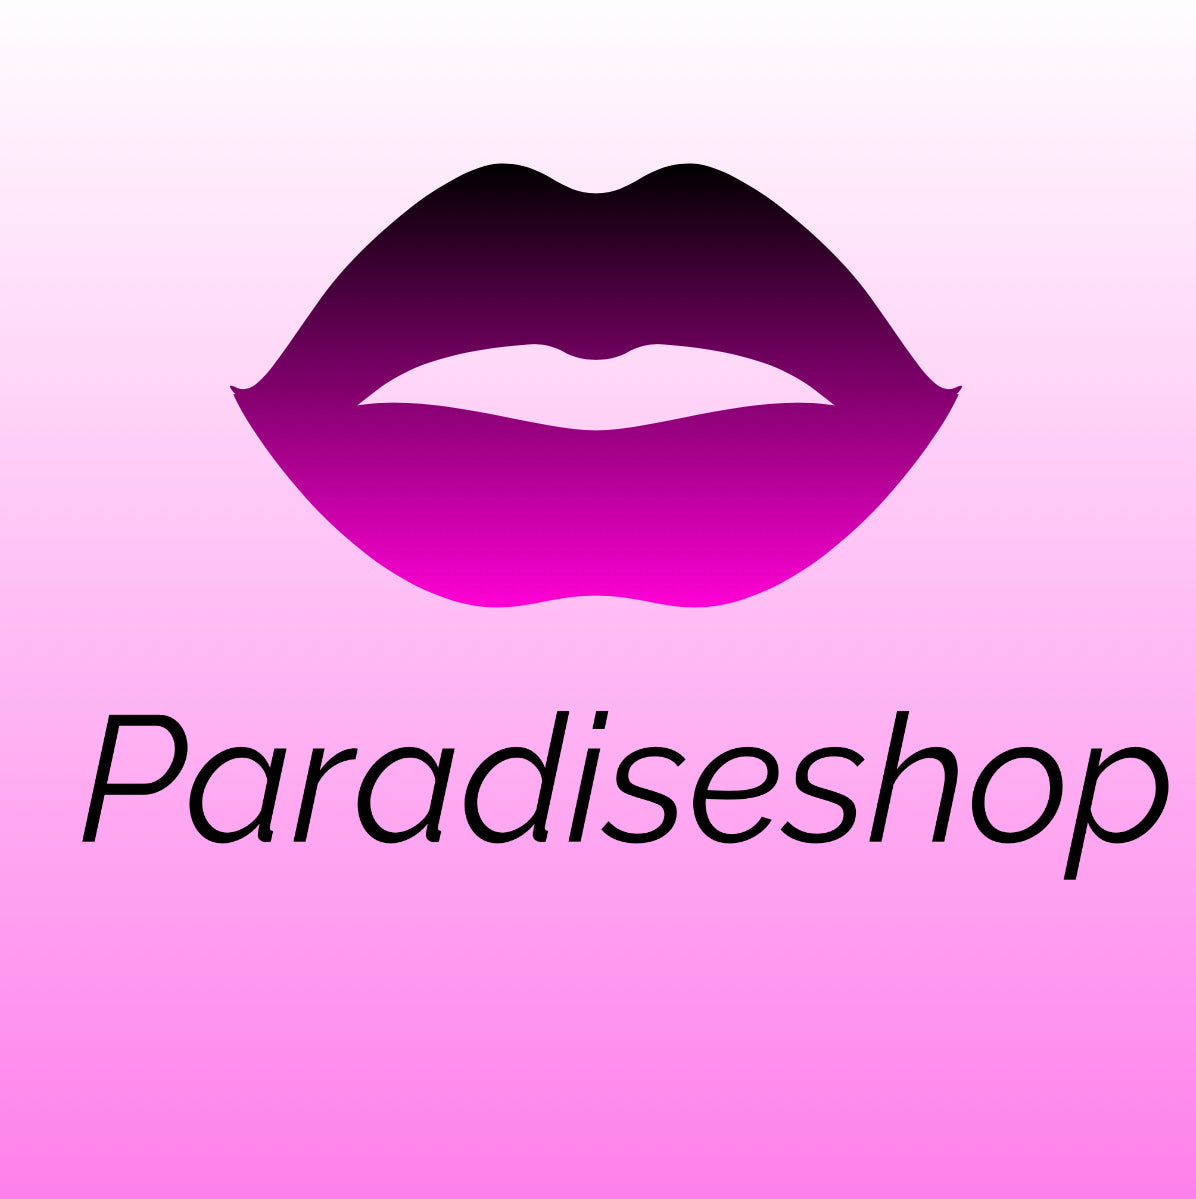 TheParadiseShop